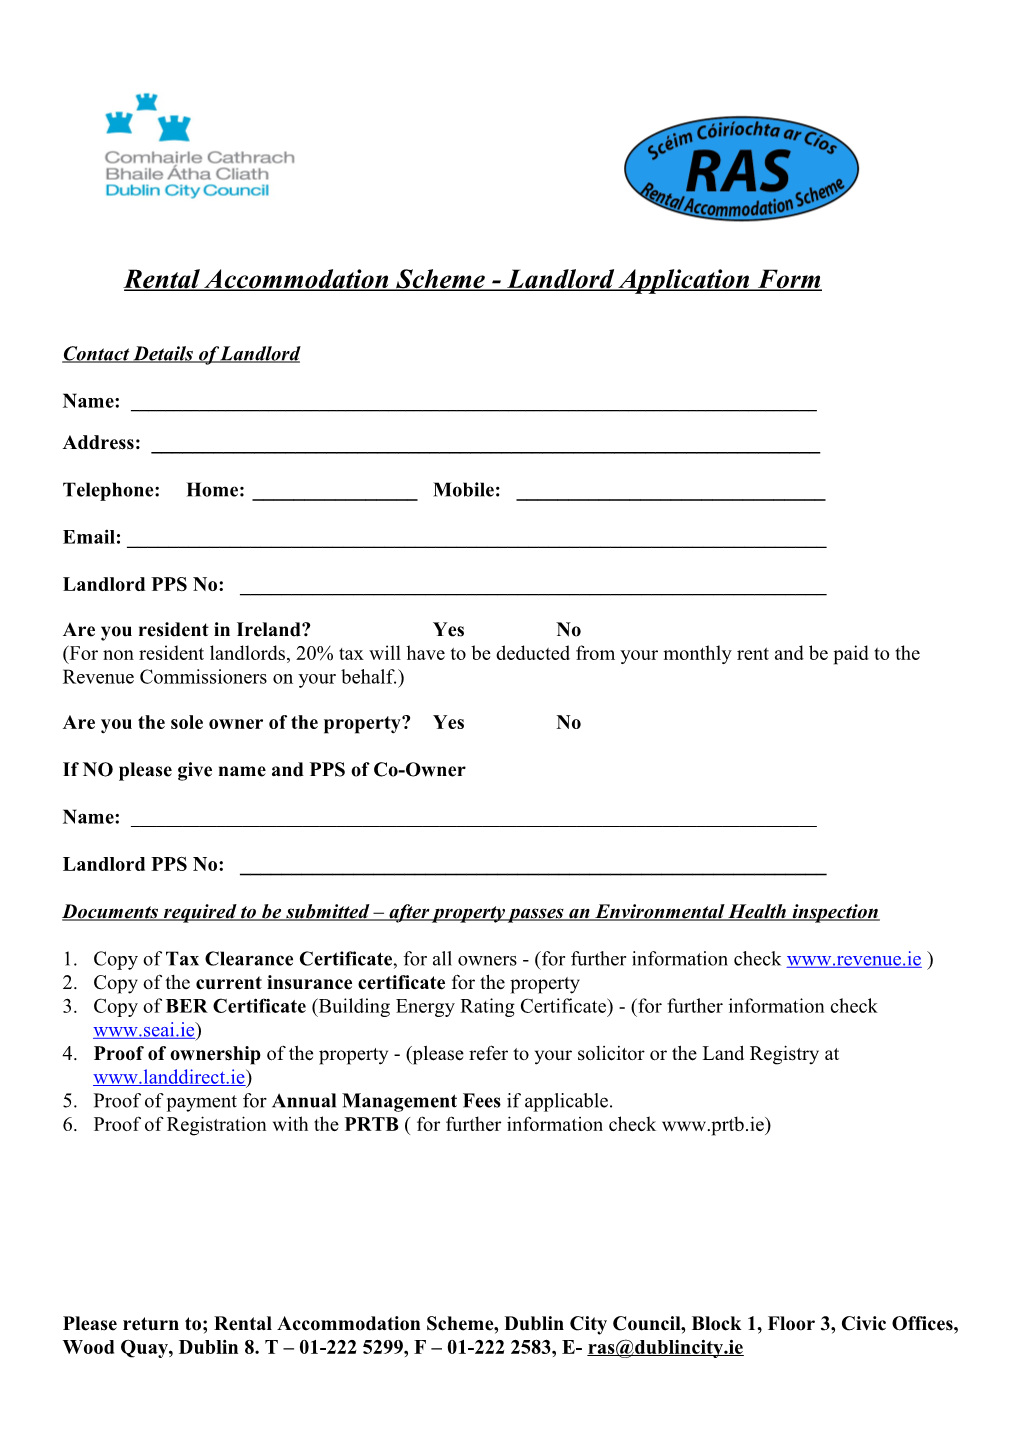 Rental Accommodation Scheme - Landlord Application Form